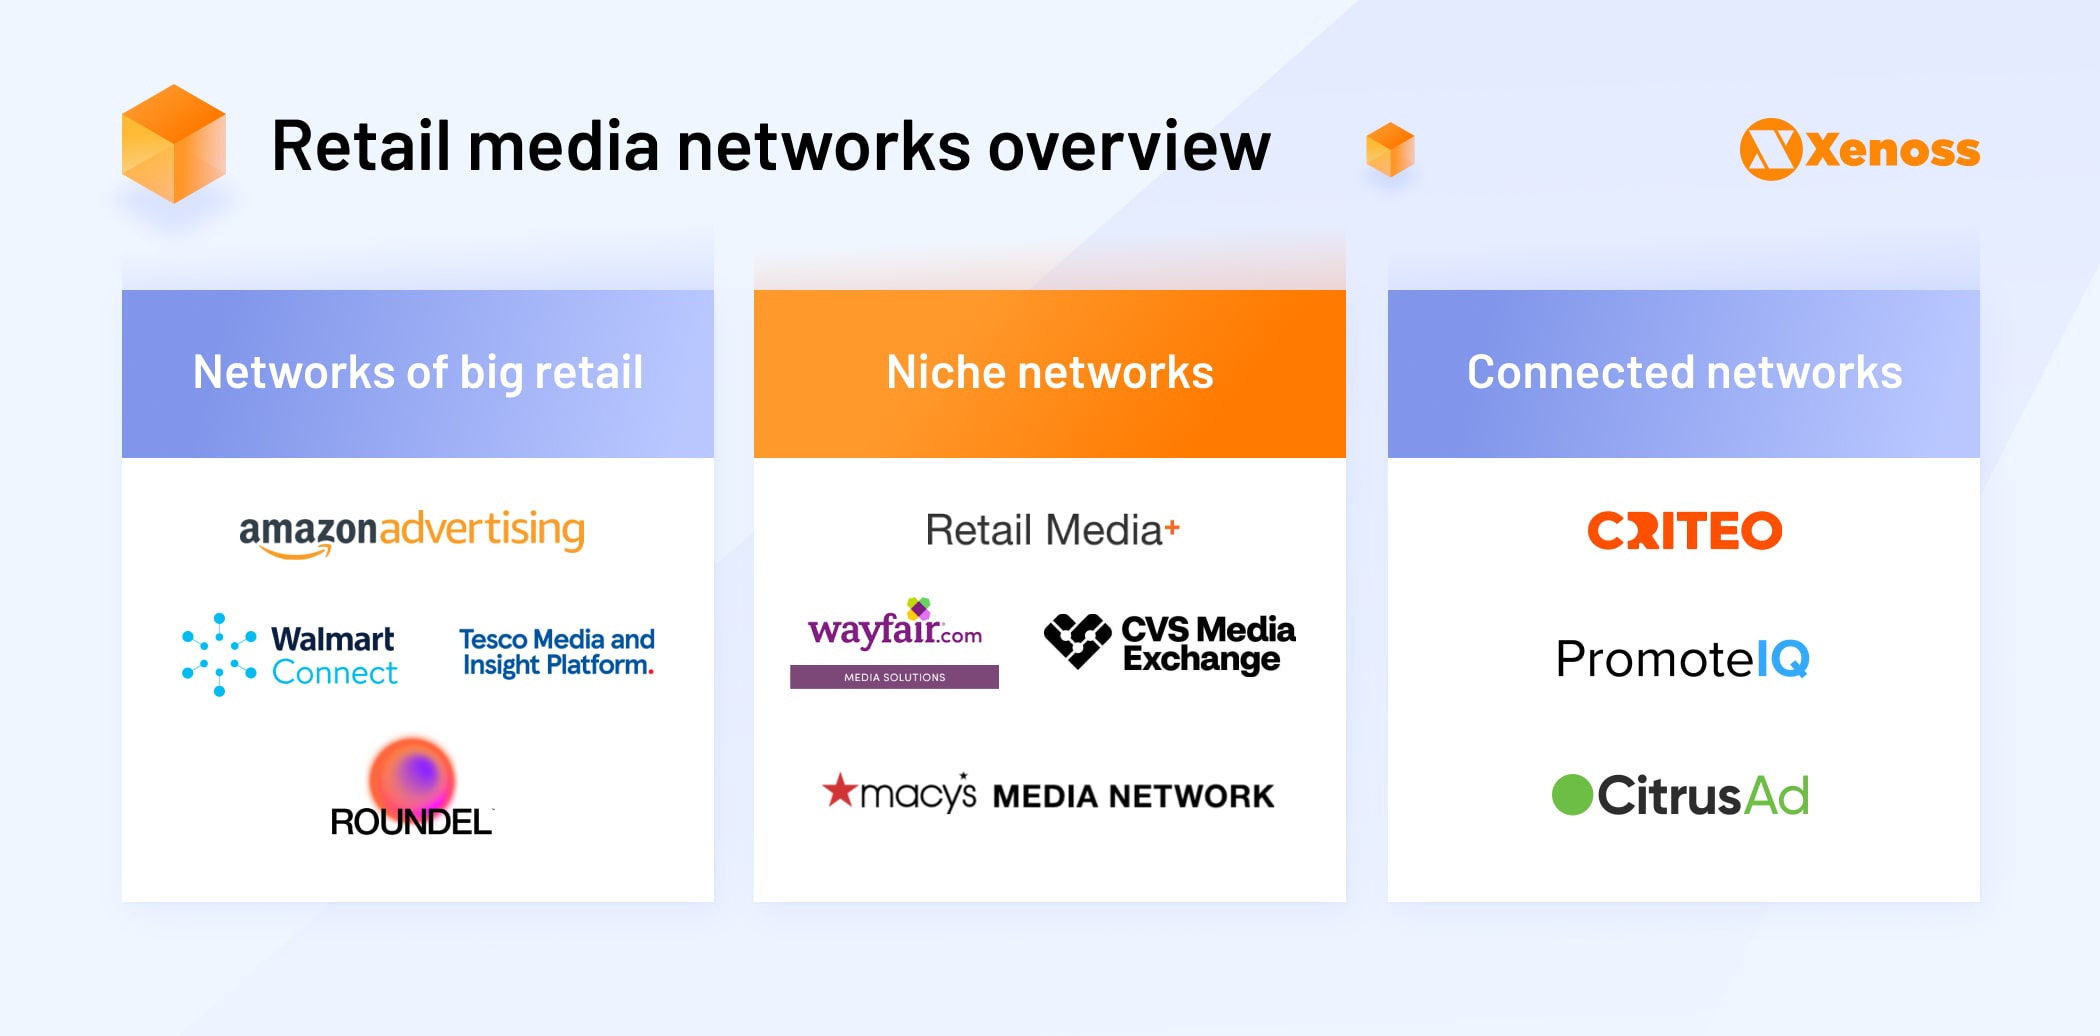 Retail media networks overview - Xenoss blog - Retail Media Advertising